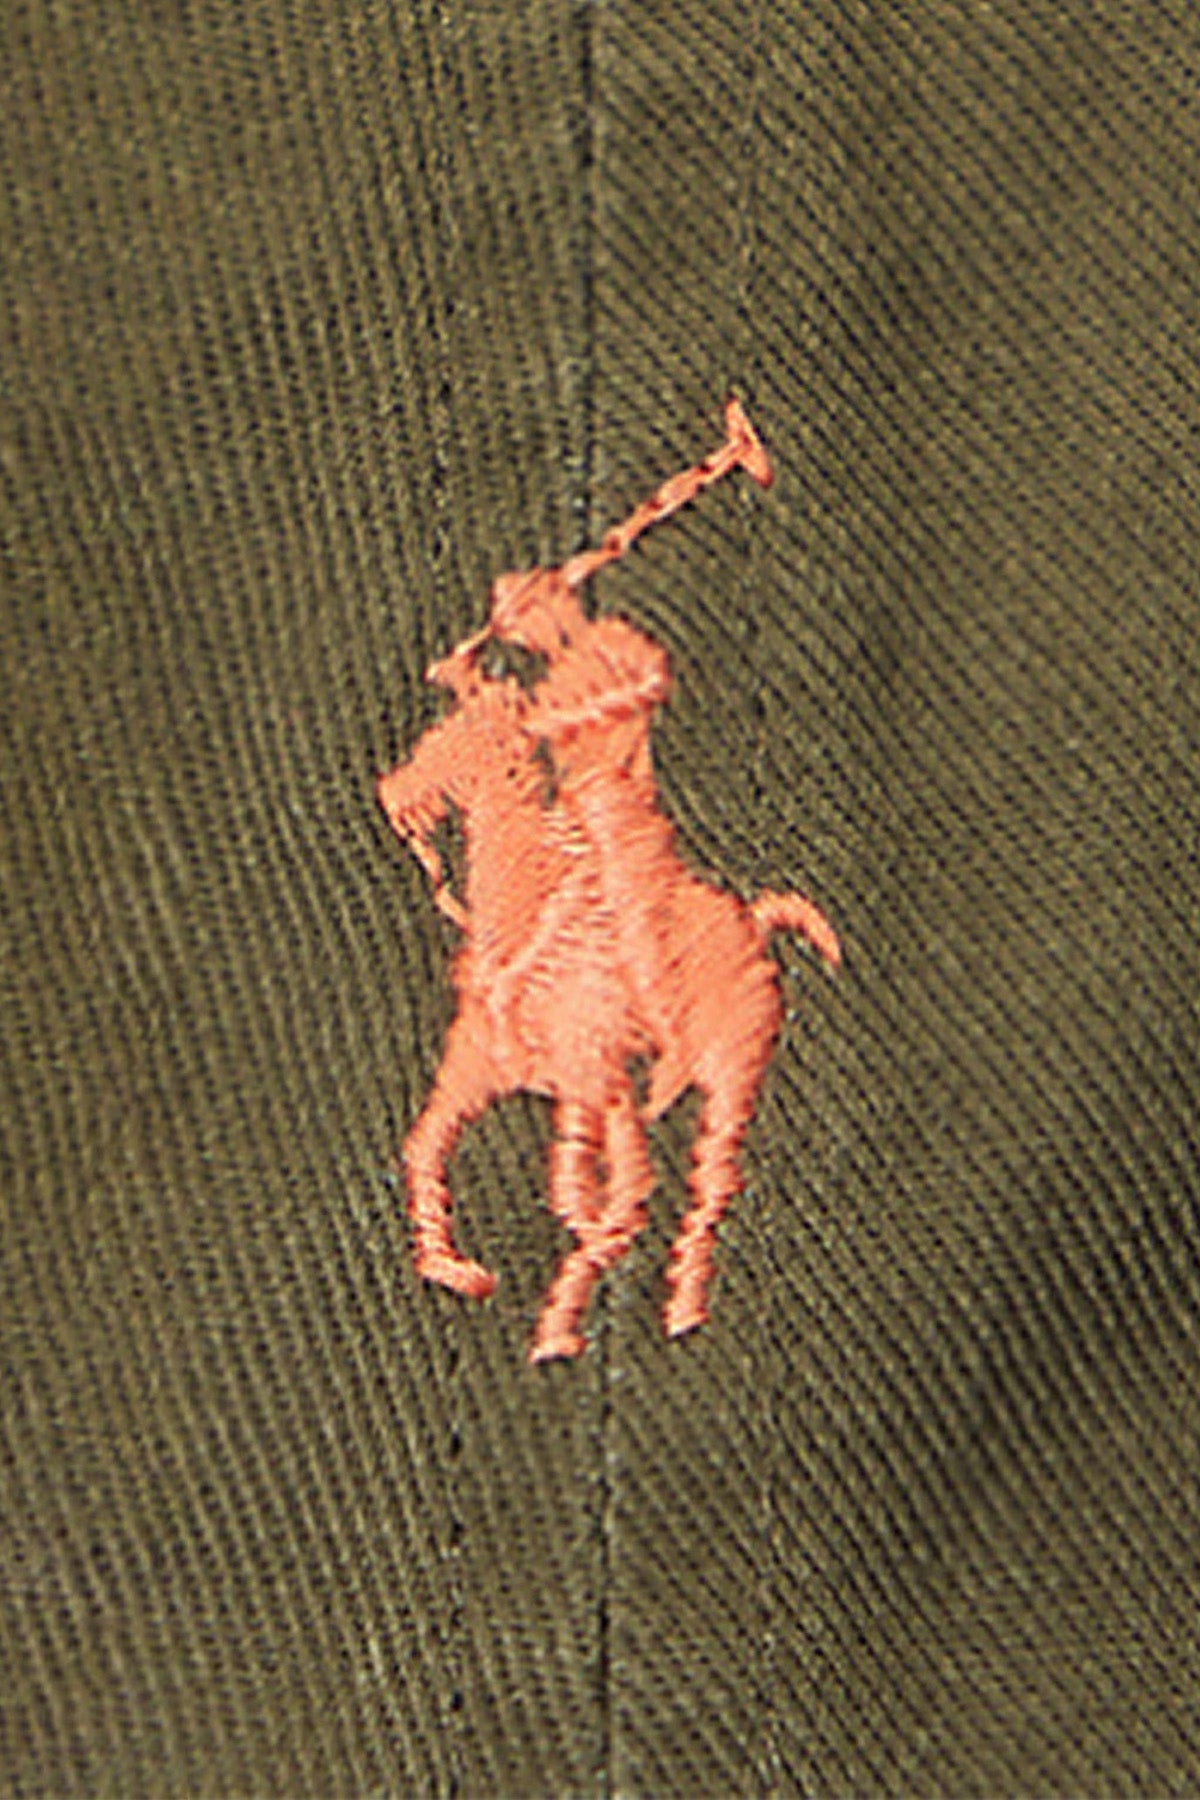 Polo Ralph Lauren Pony Logolu Şapka